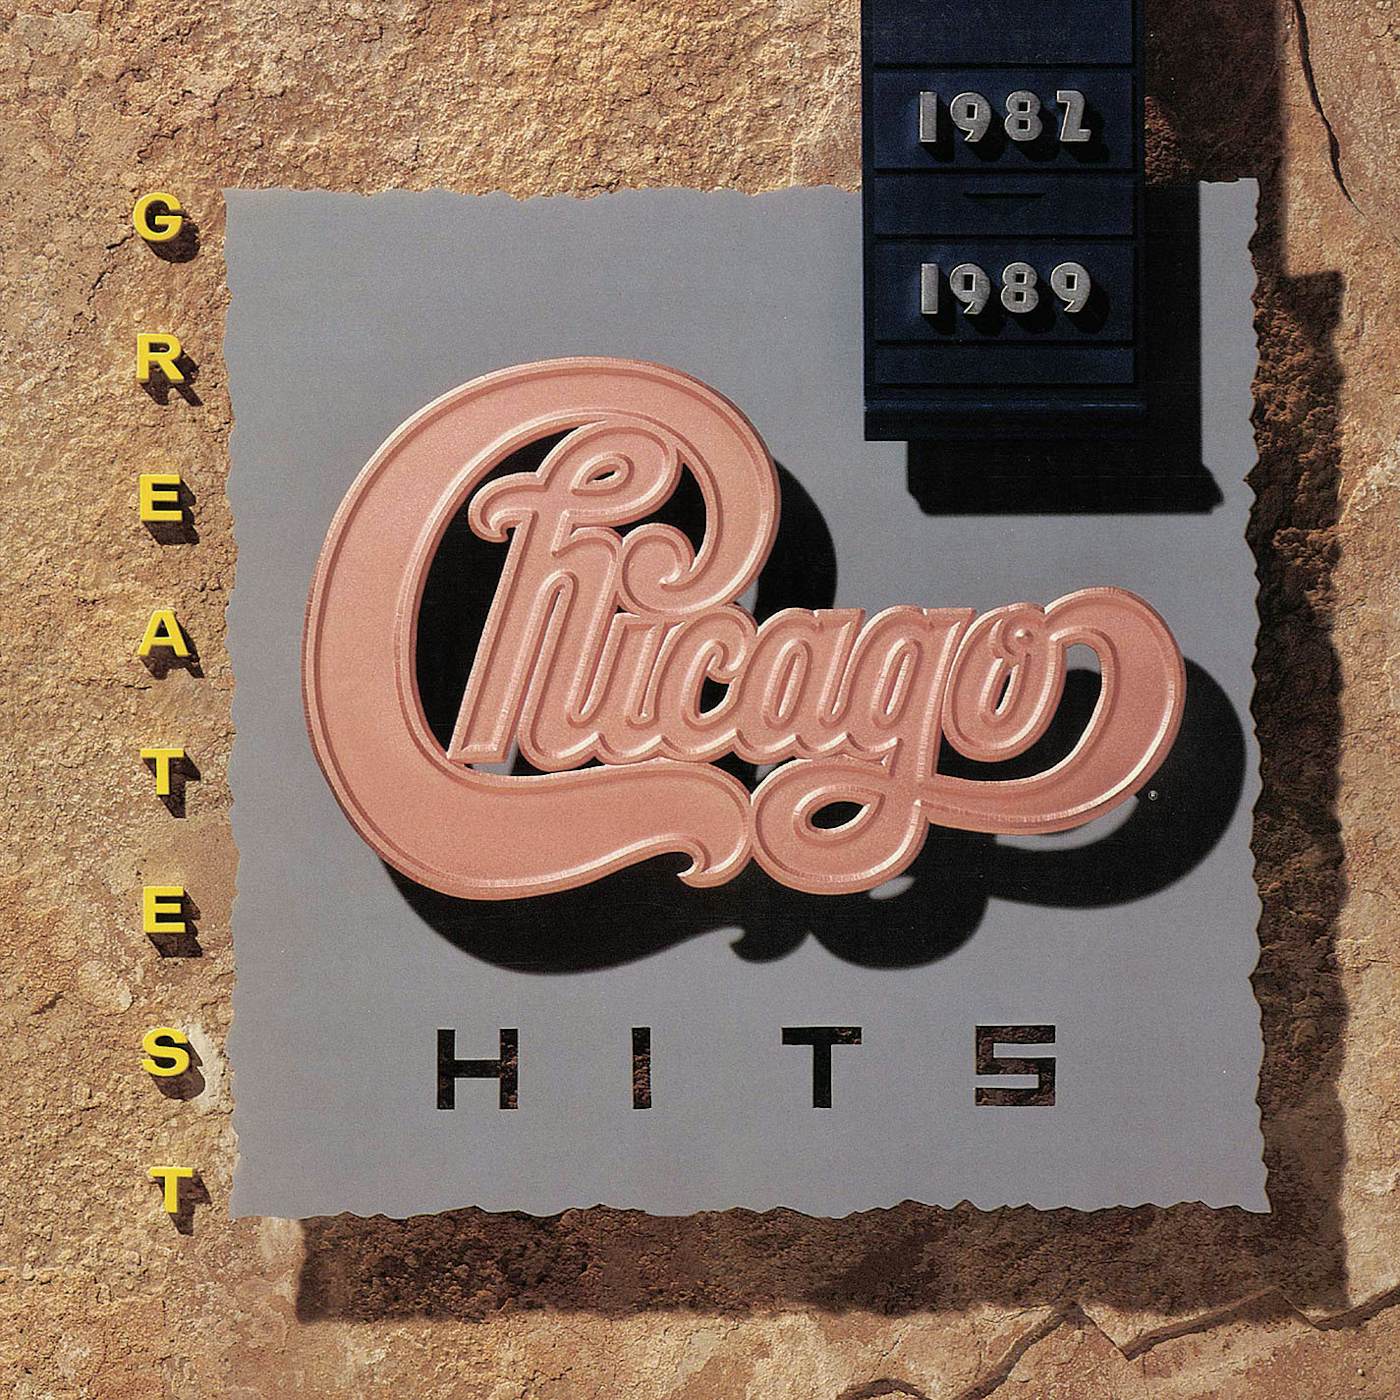 Chicago Greatest Hits 1982-1989 Vinyl Record